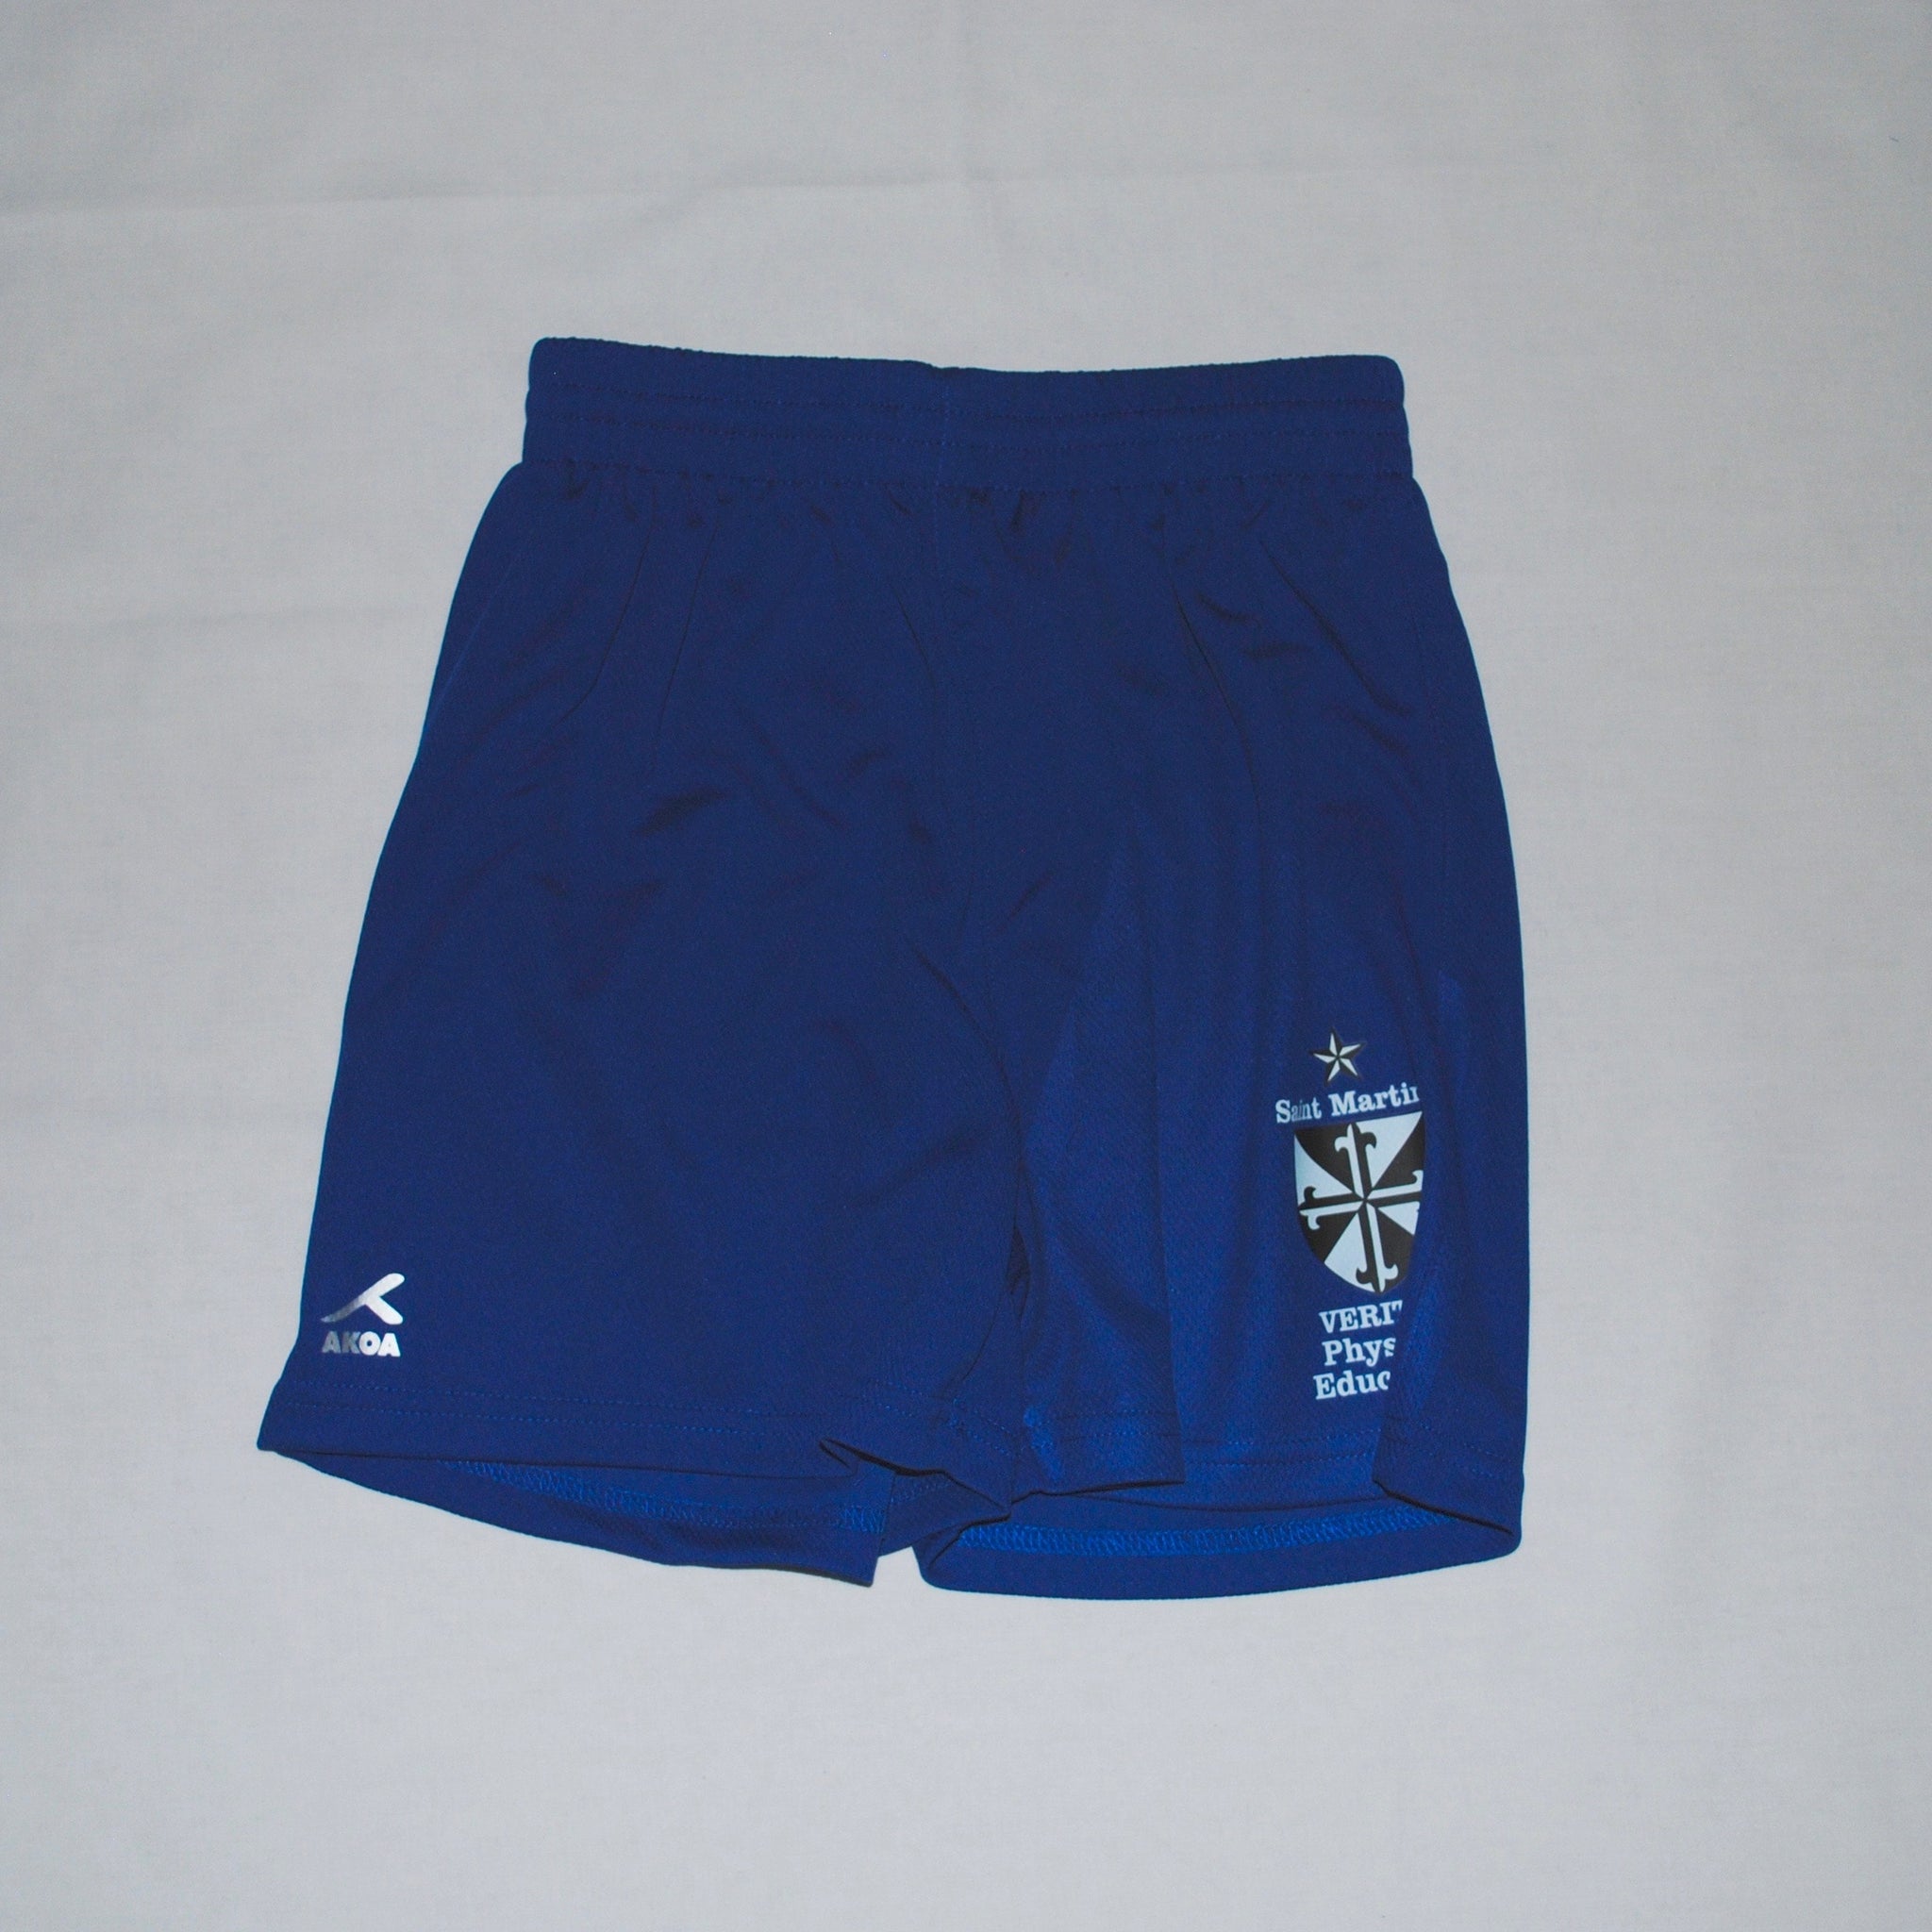 St Martin's Boys PE Shorts - Swifts Uniforms